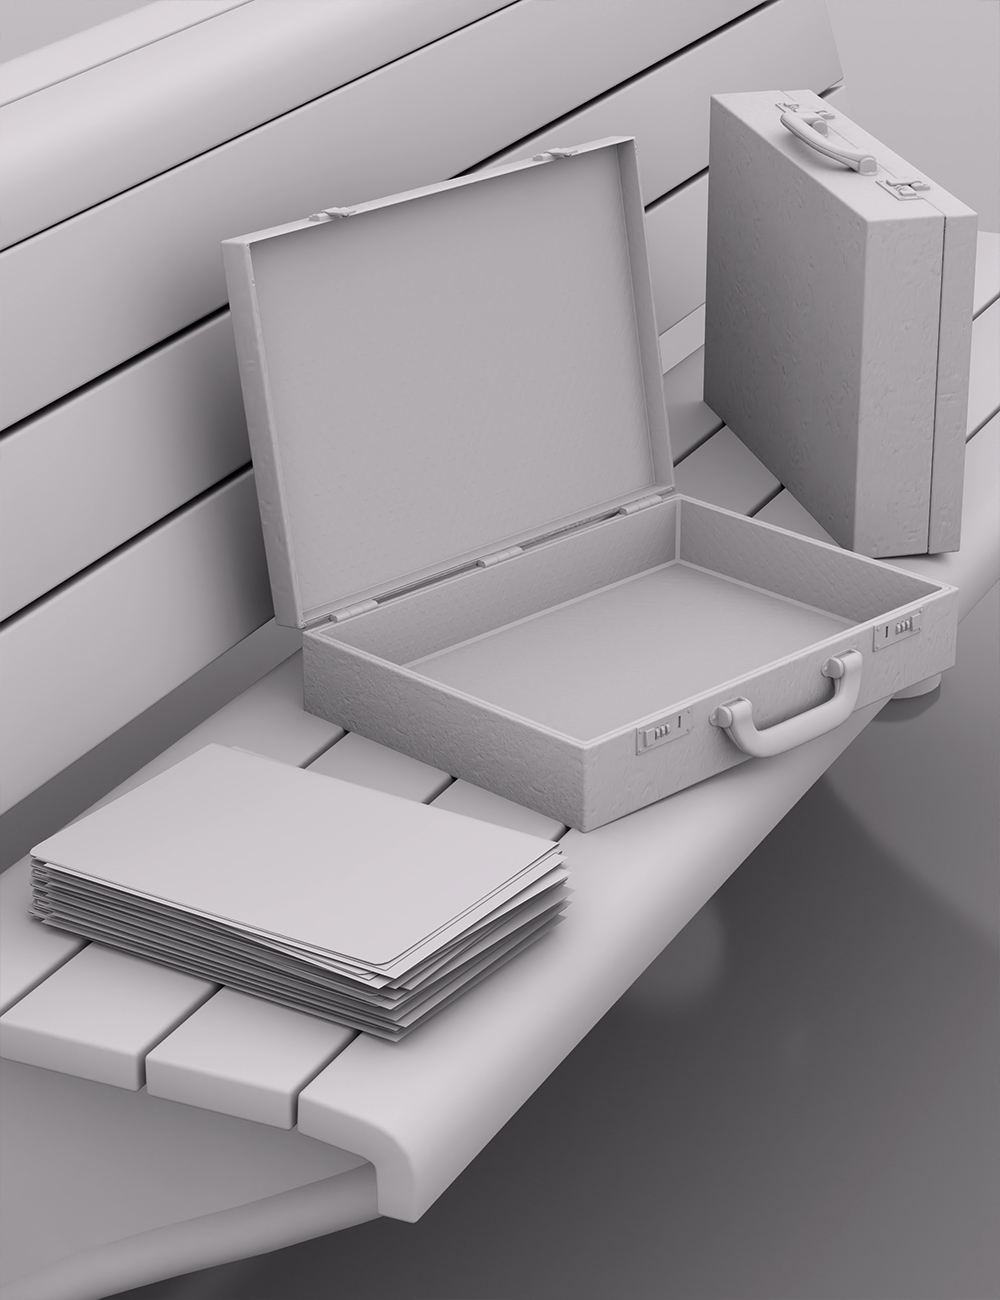 City Office Block Props by: Predatron, 3D Models by Daz 3D